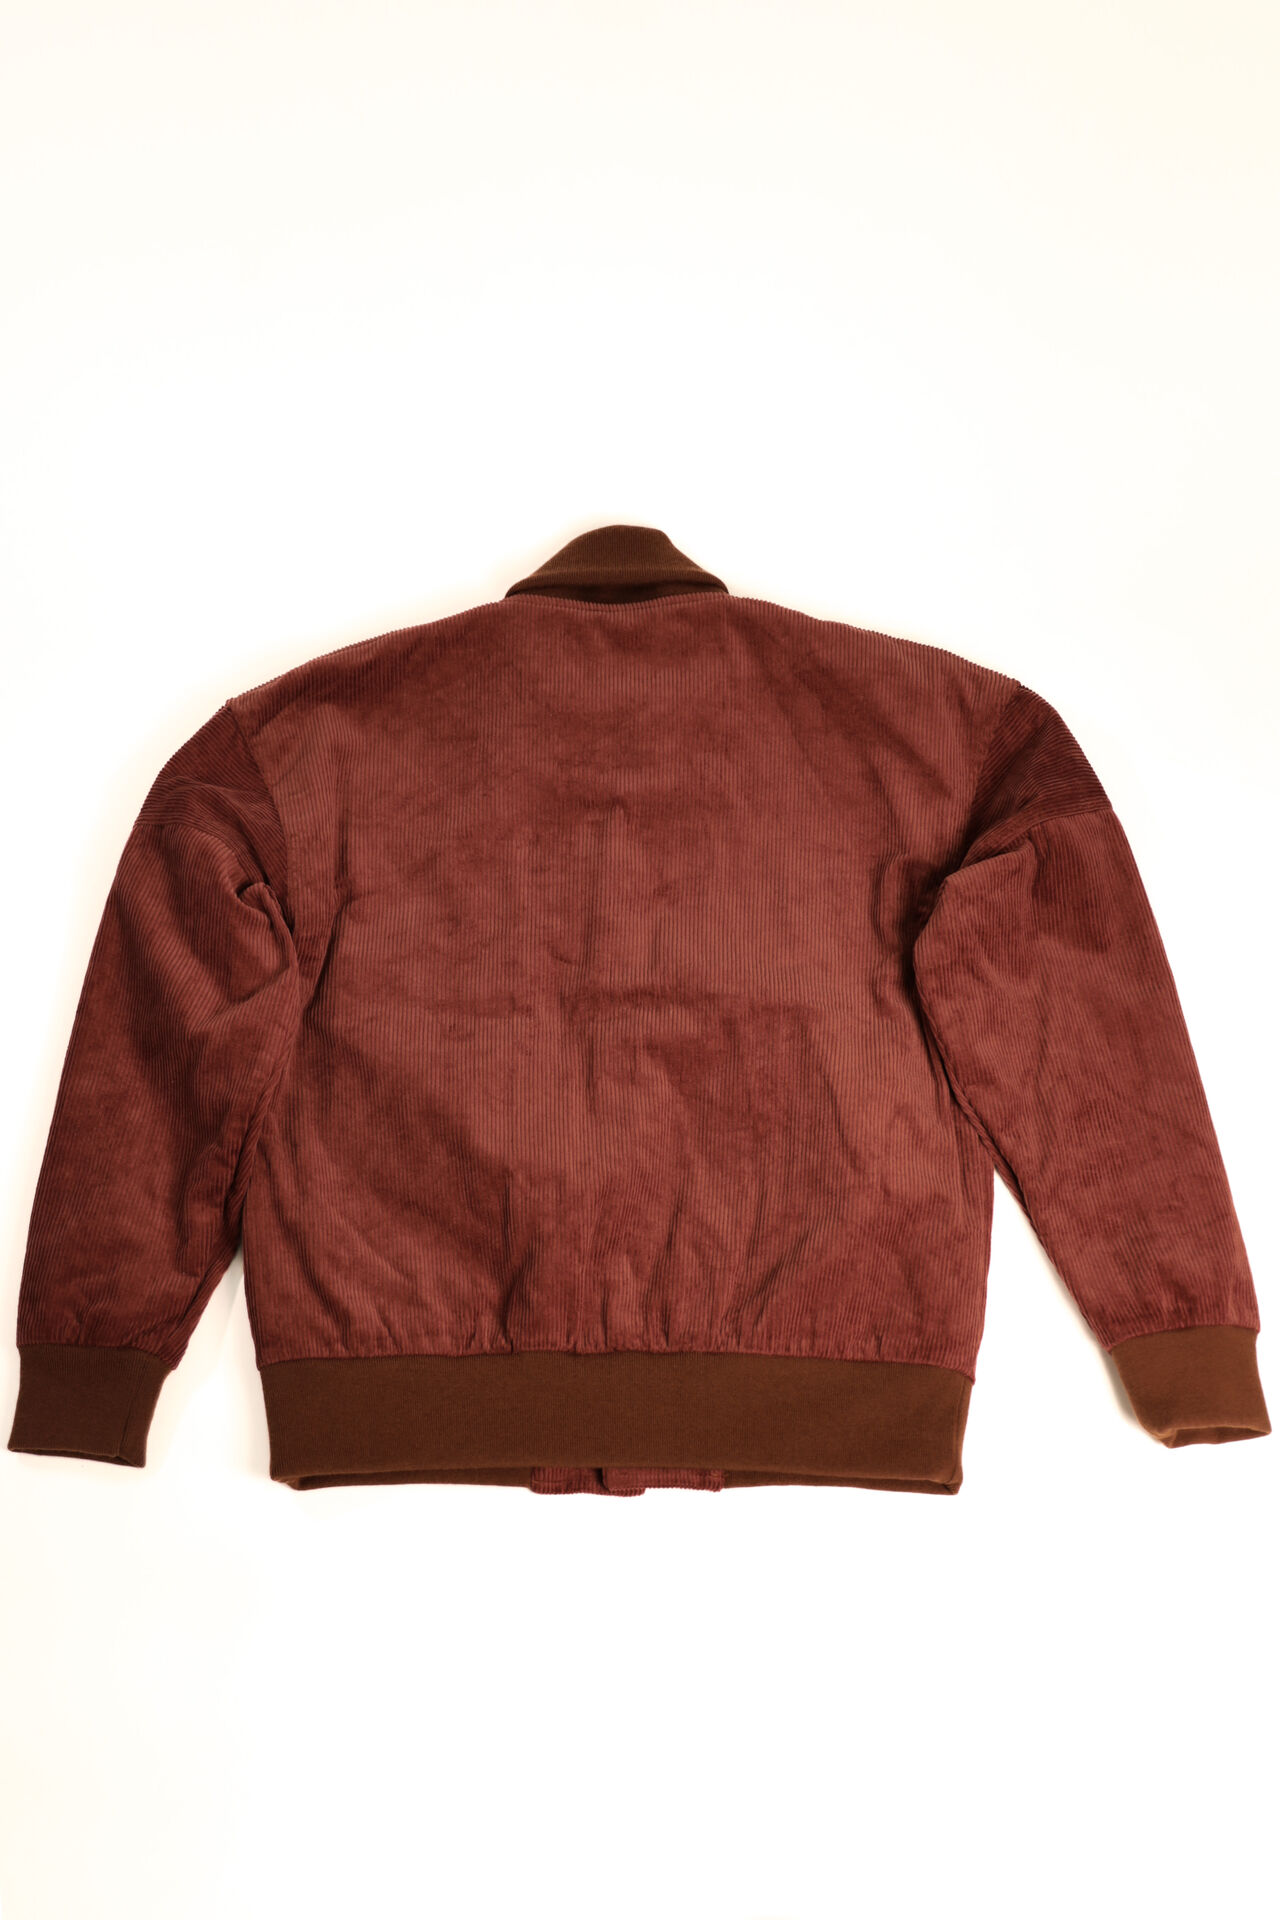 TNK501SZA "Sazanami" Corduroy Jacket (Brown),, large image number 12